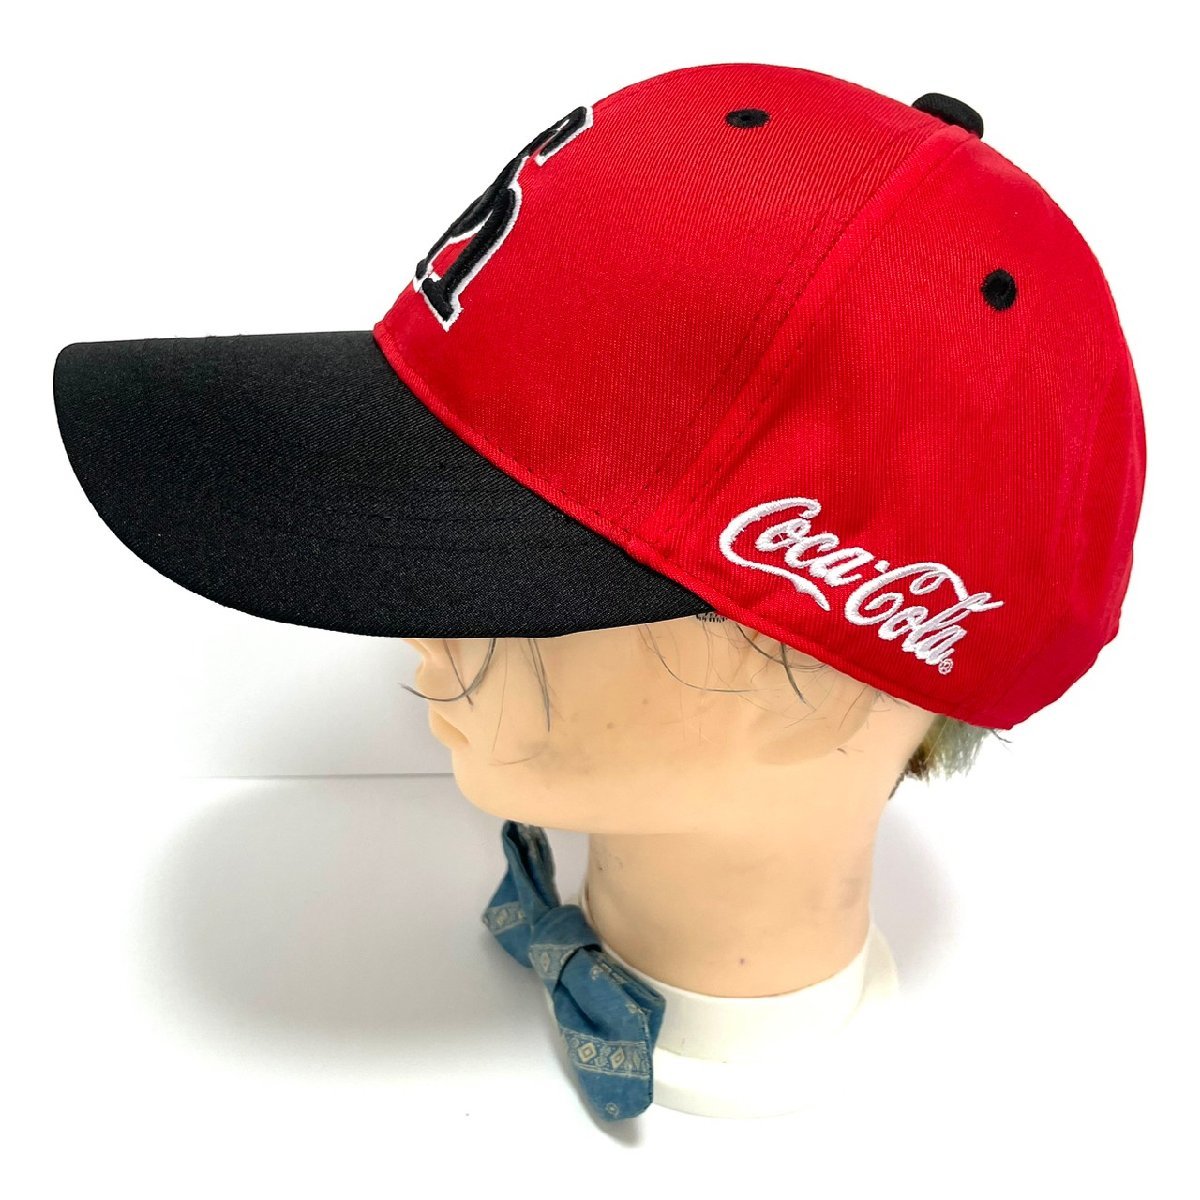 (^w^)b 未使用 コカコーラ 福岡 ソフトバンク ホークス ベースボール キャップ 帽子 赤×黒 HAWKS Coca-Cola FREE 57cm-61cm C0261EEの画像2